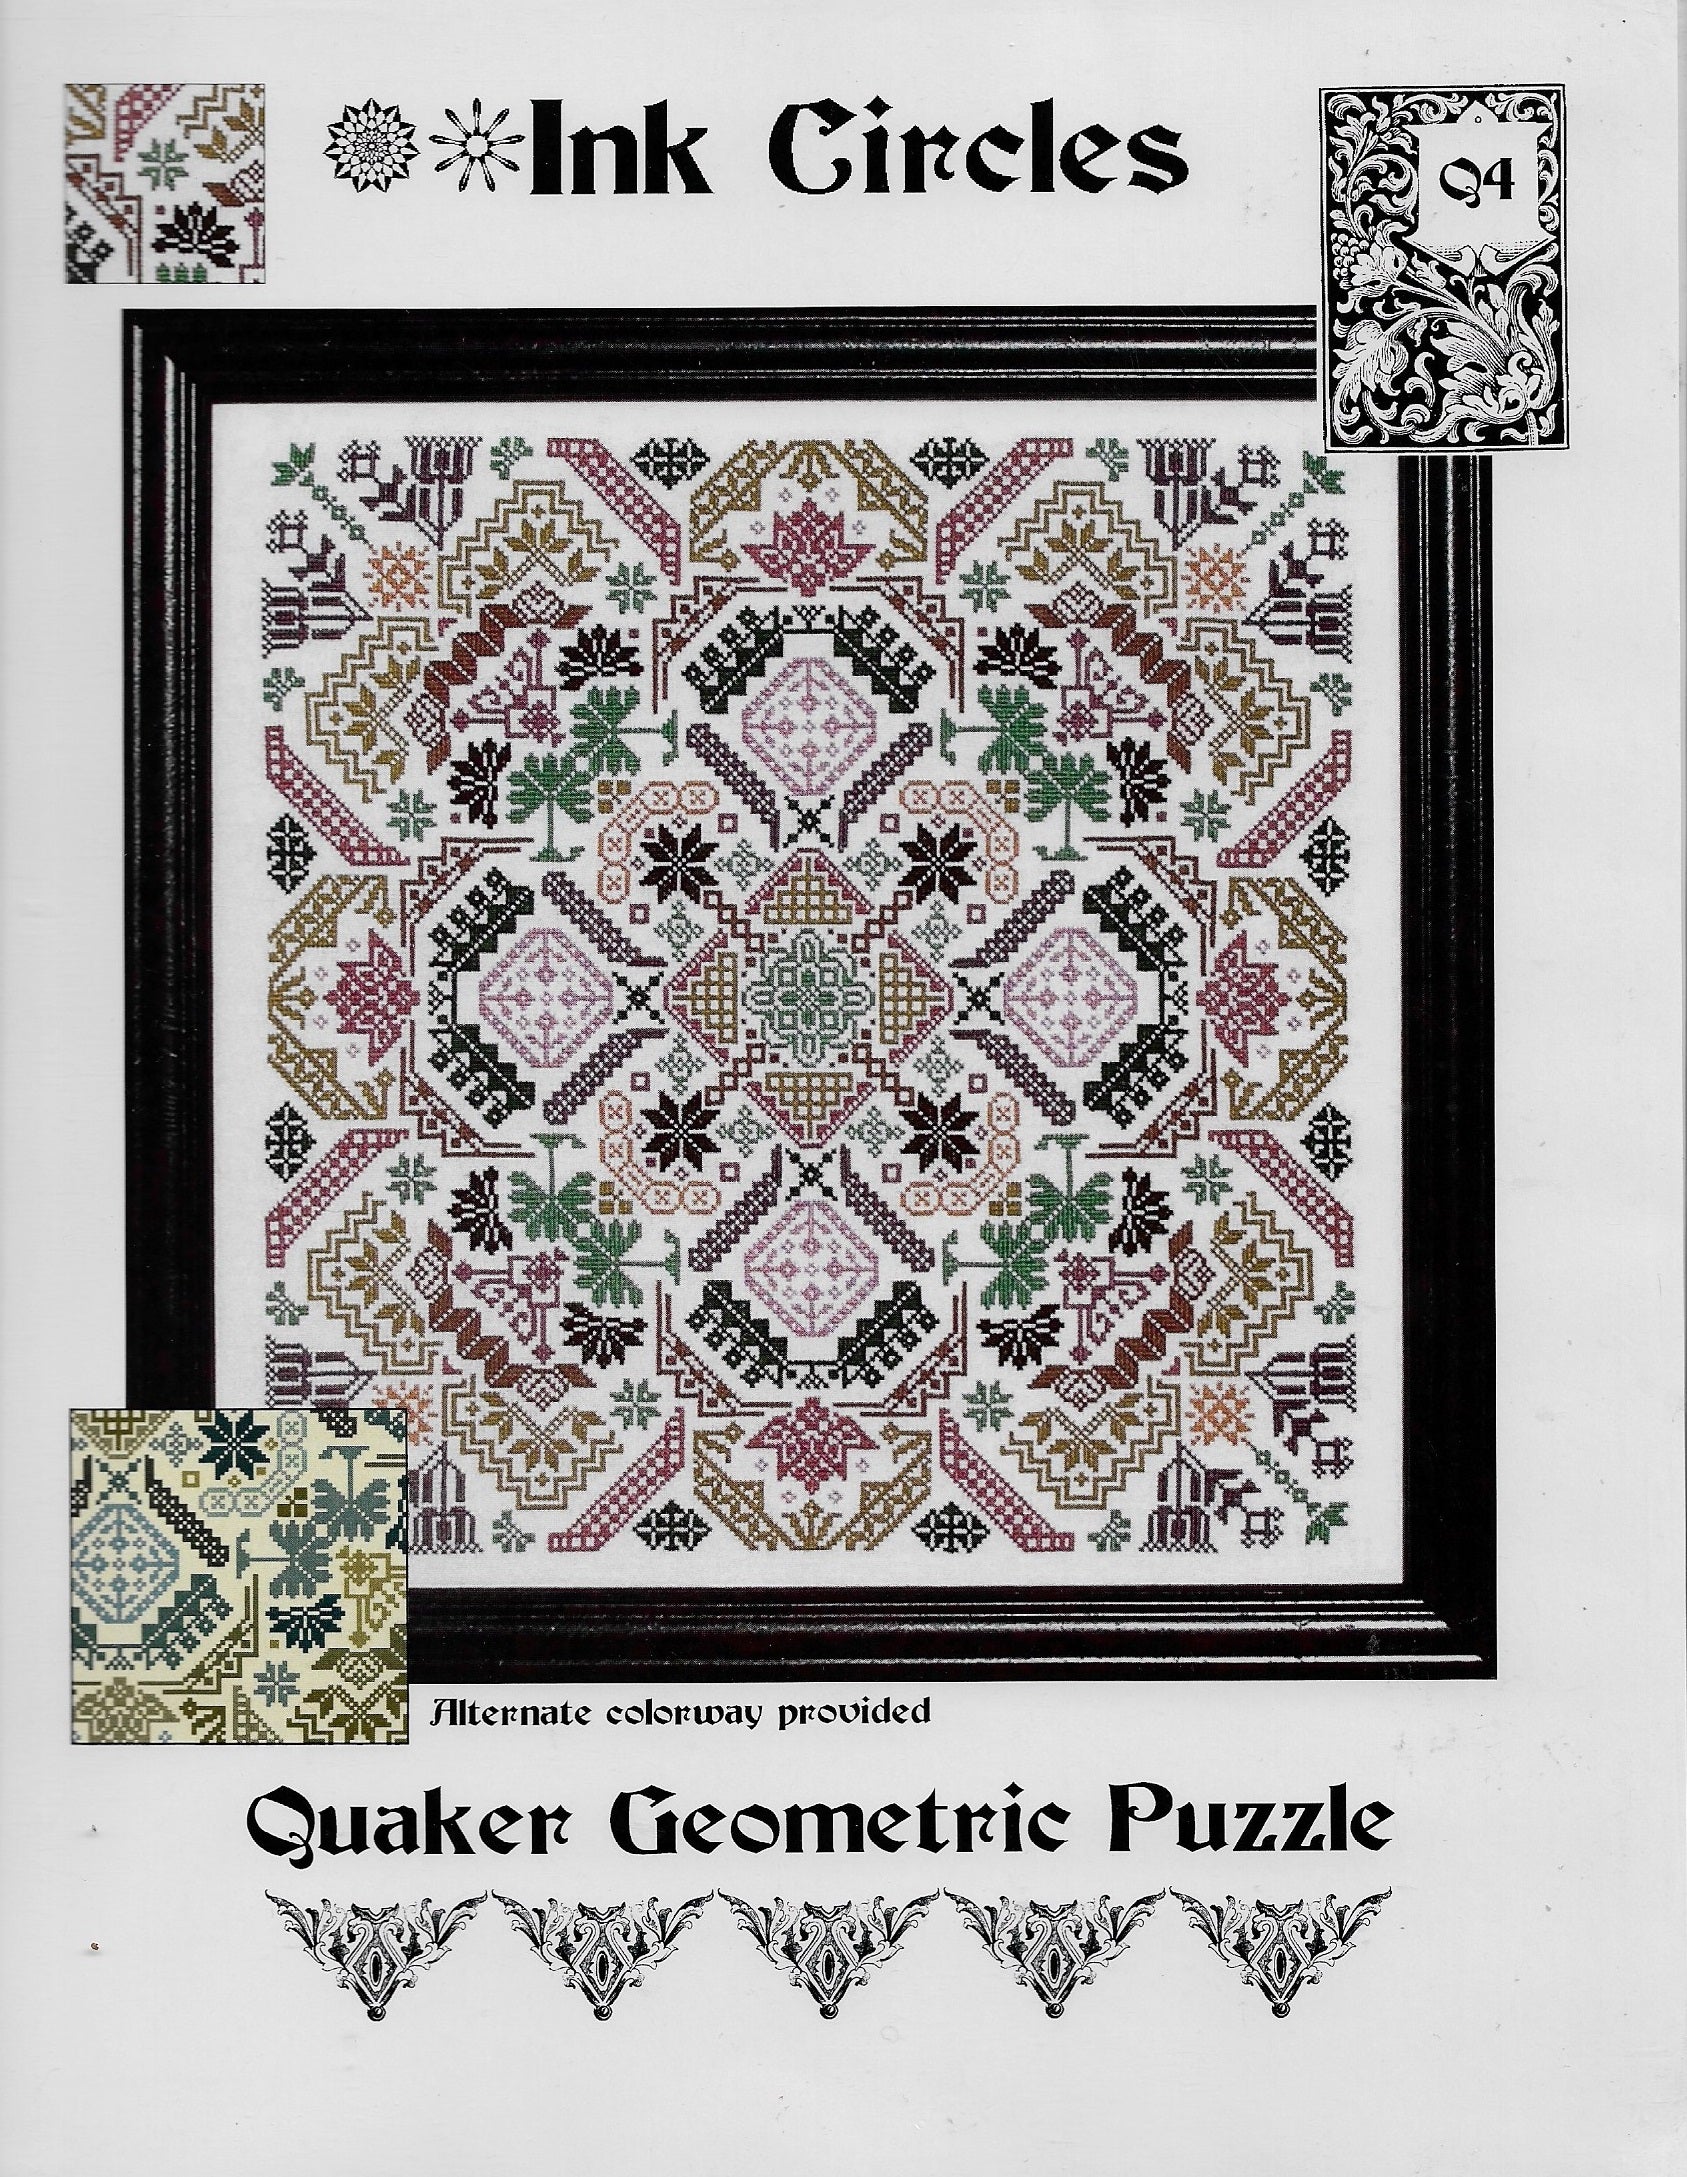 Ink Circles Quaker Geometric Puzzle cross stitch pattern